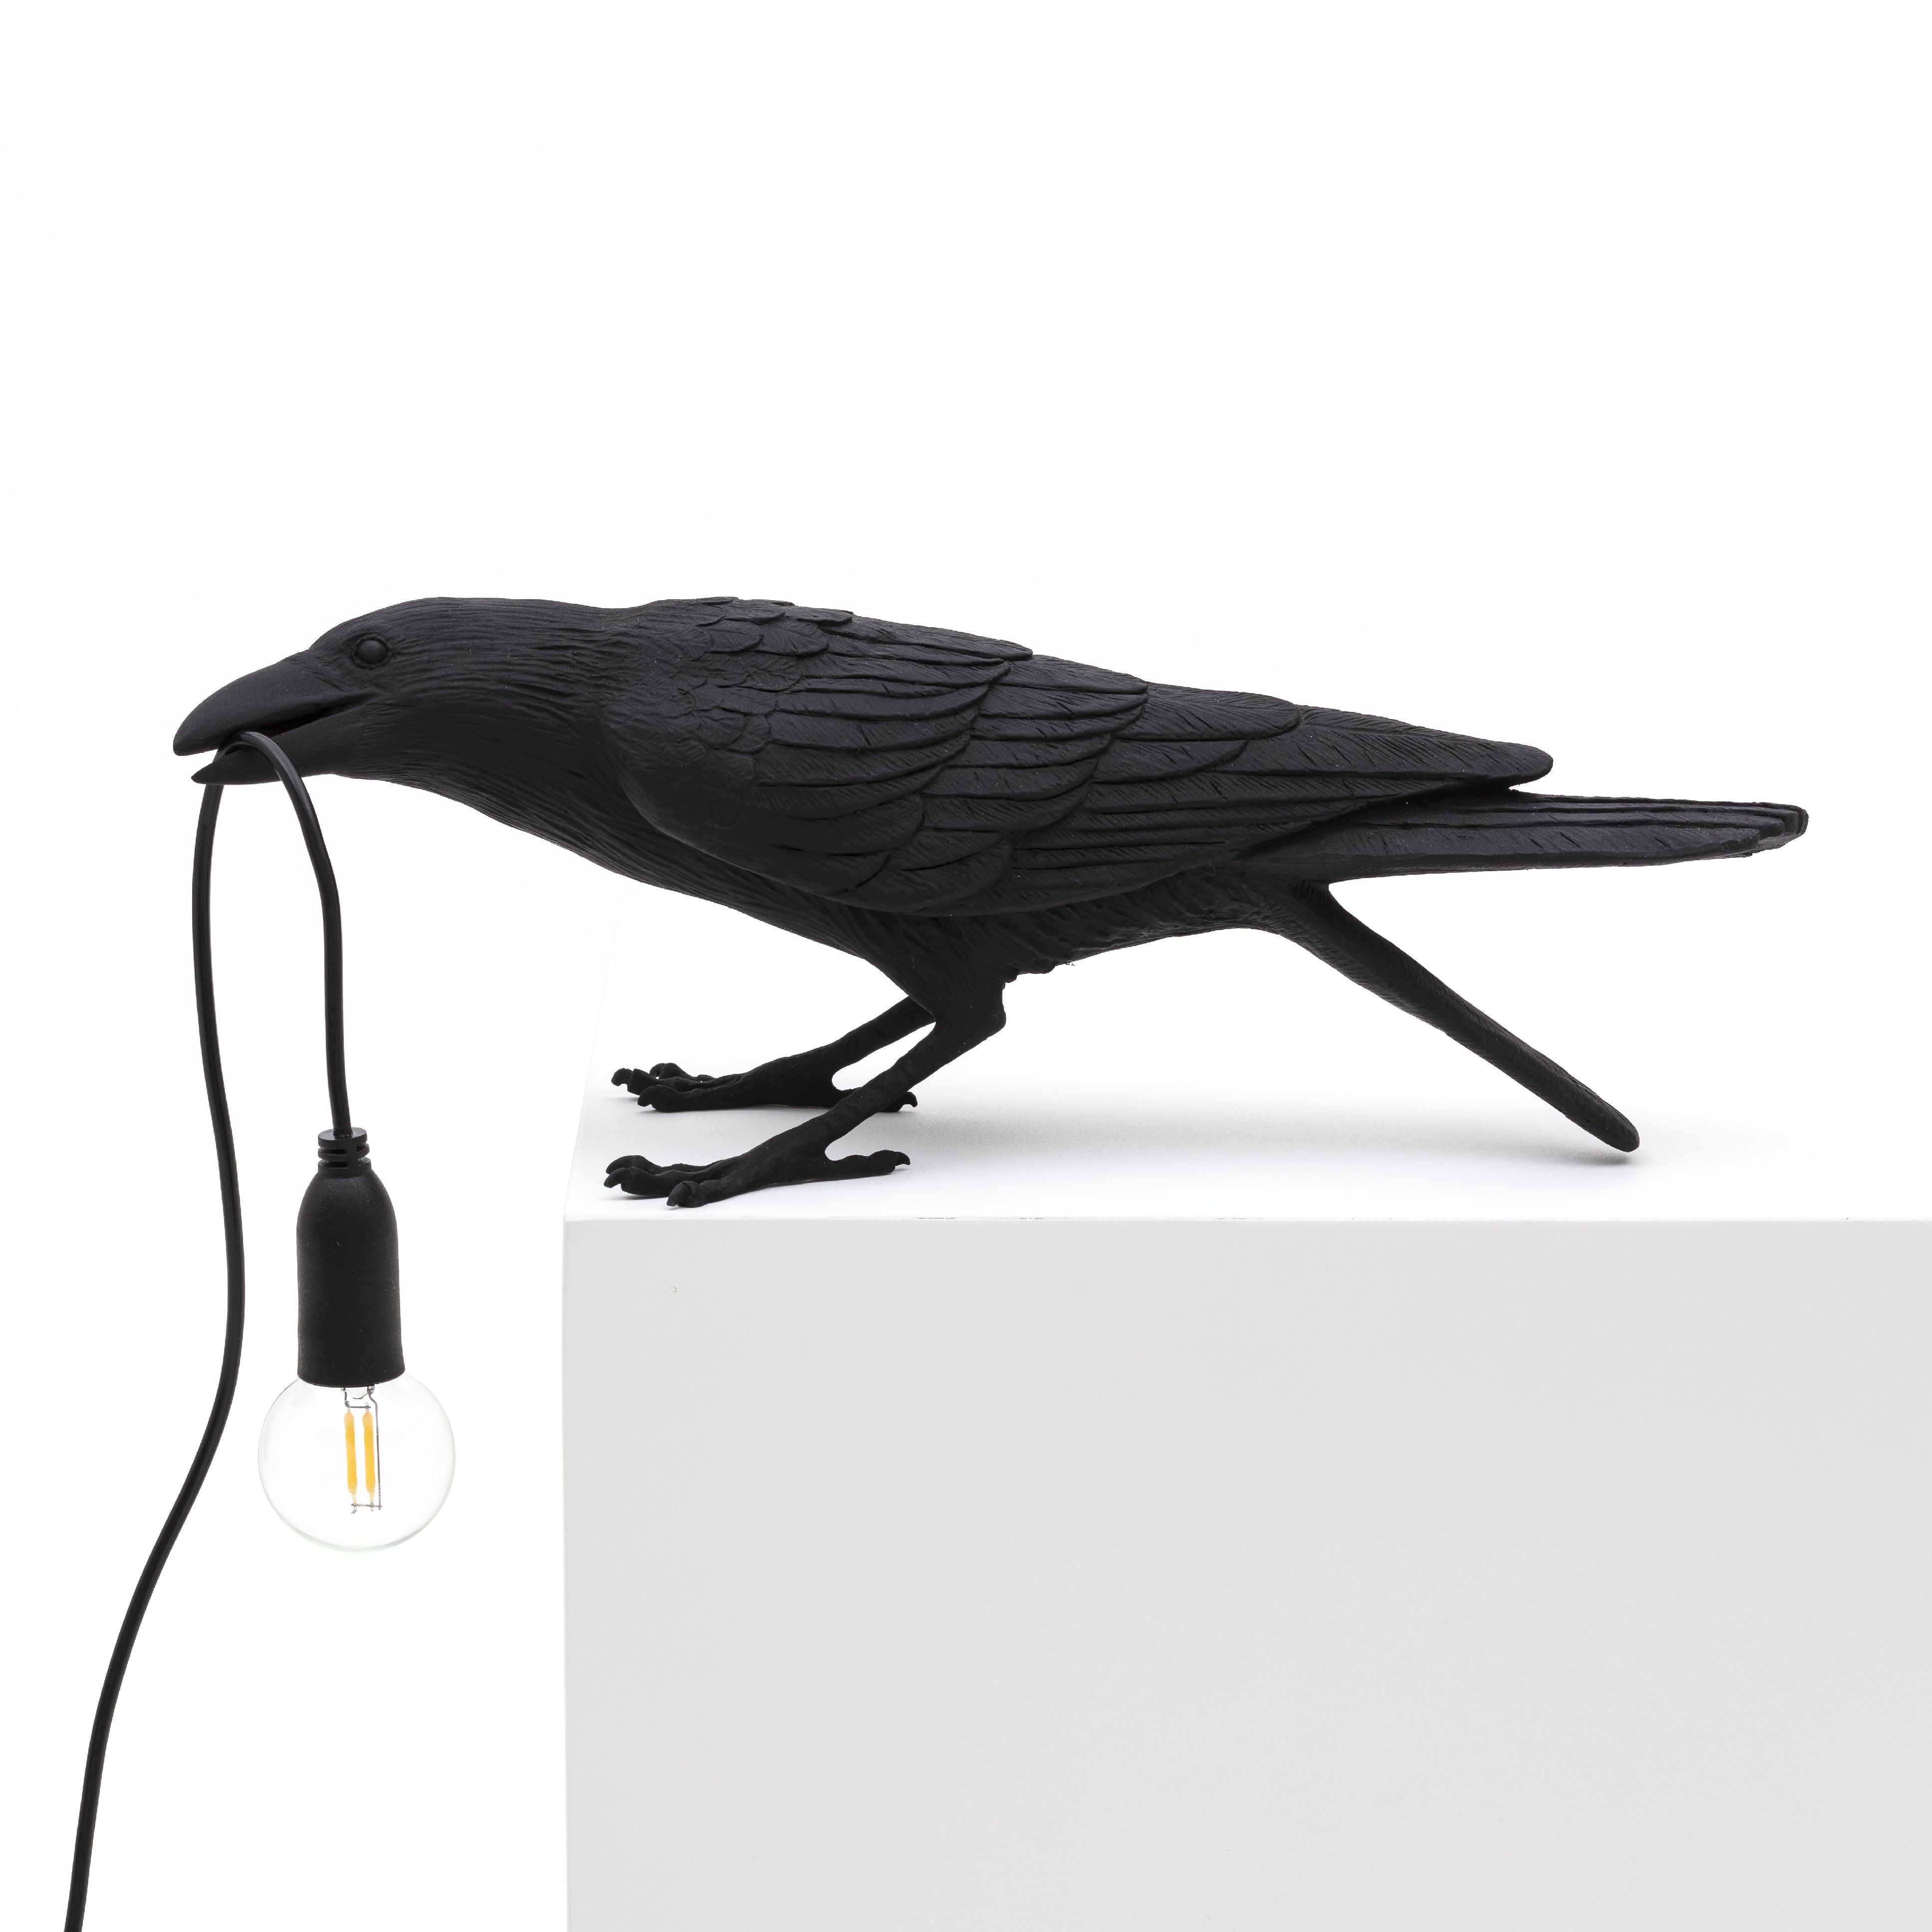 Seletti Bird Lamp spiller